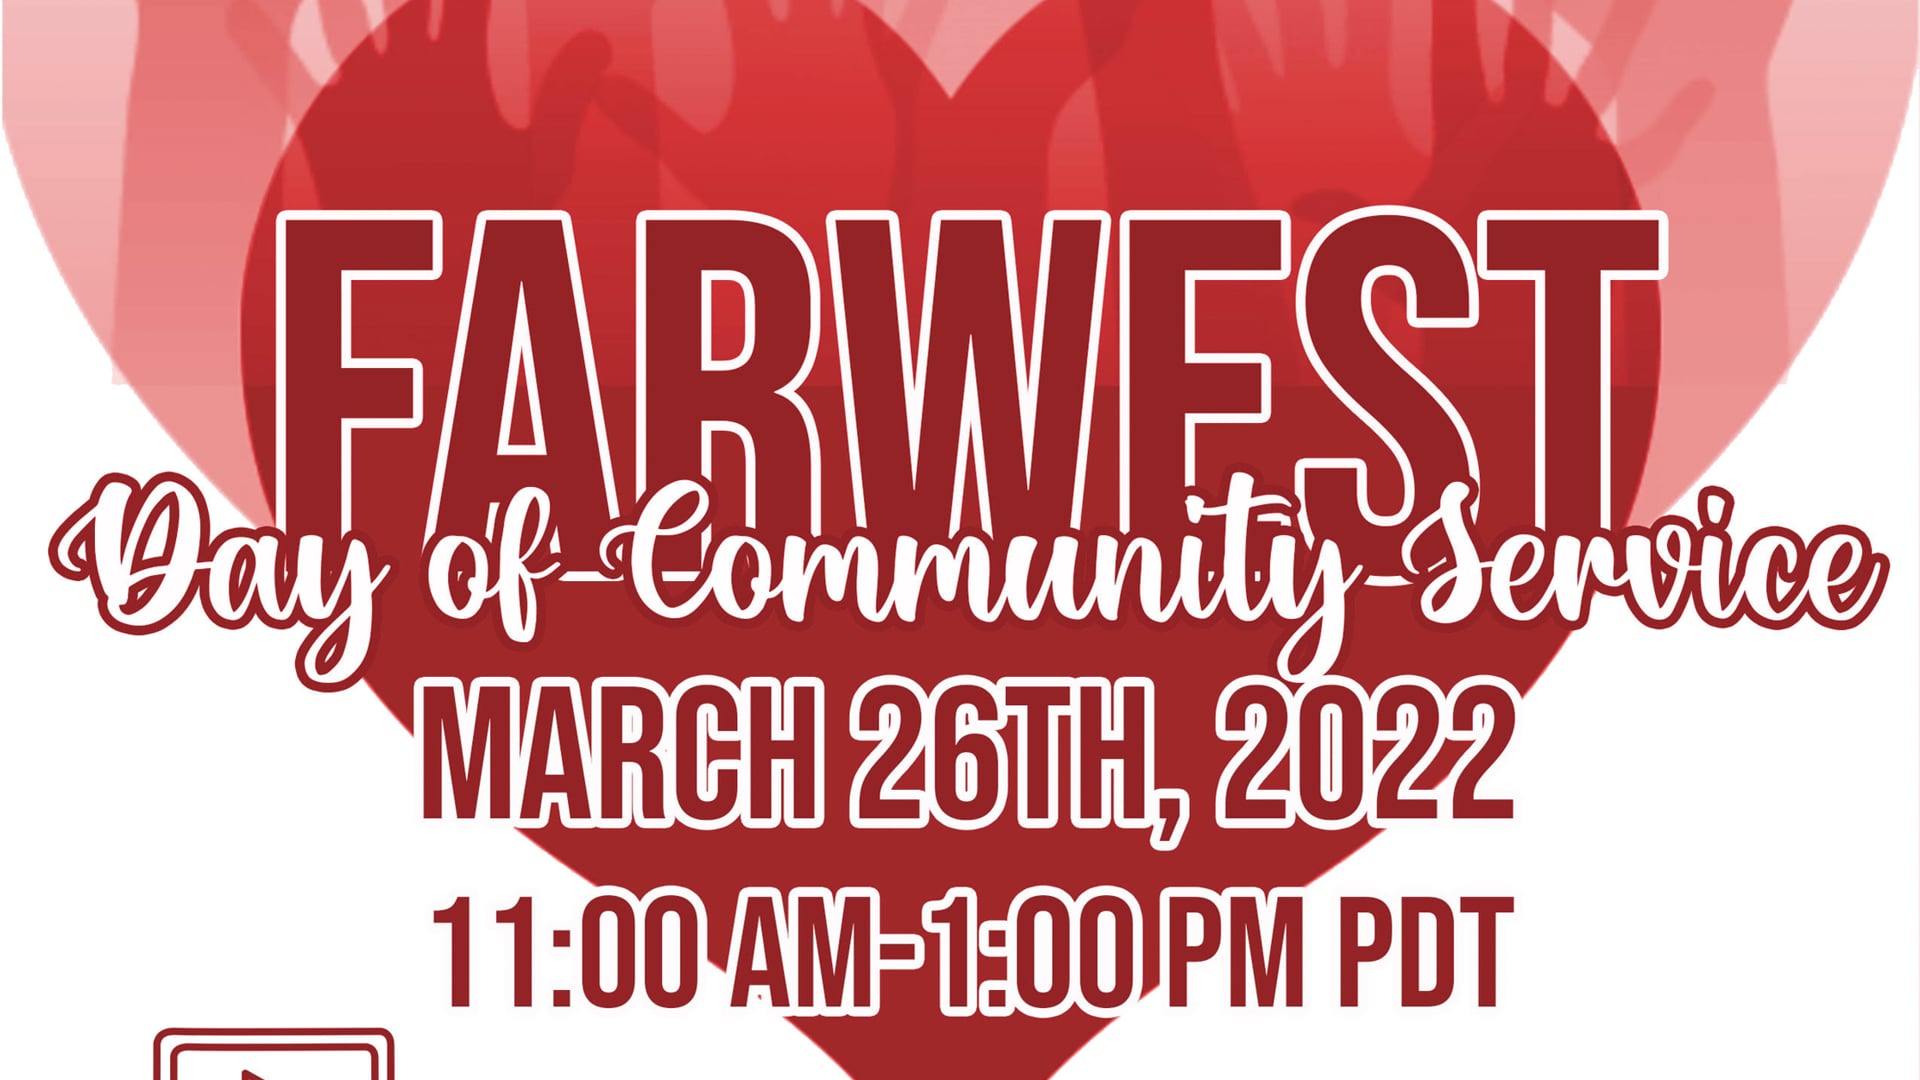 Farwest Region Community Day of Service 3-26-22